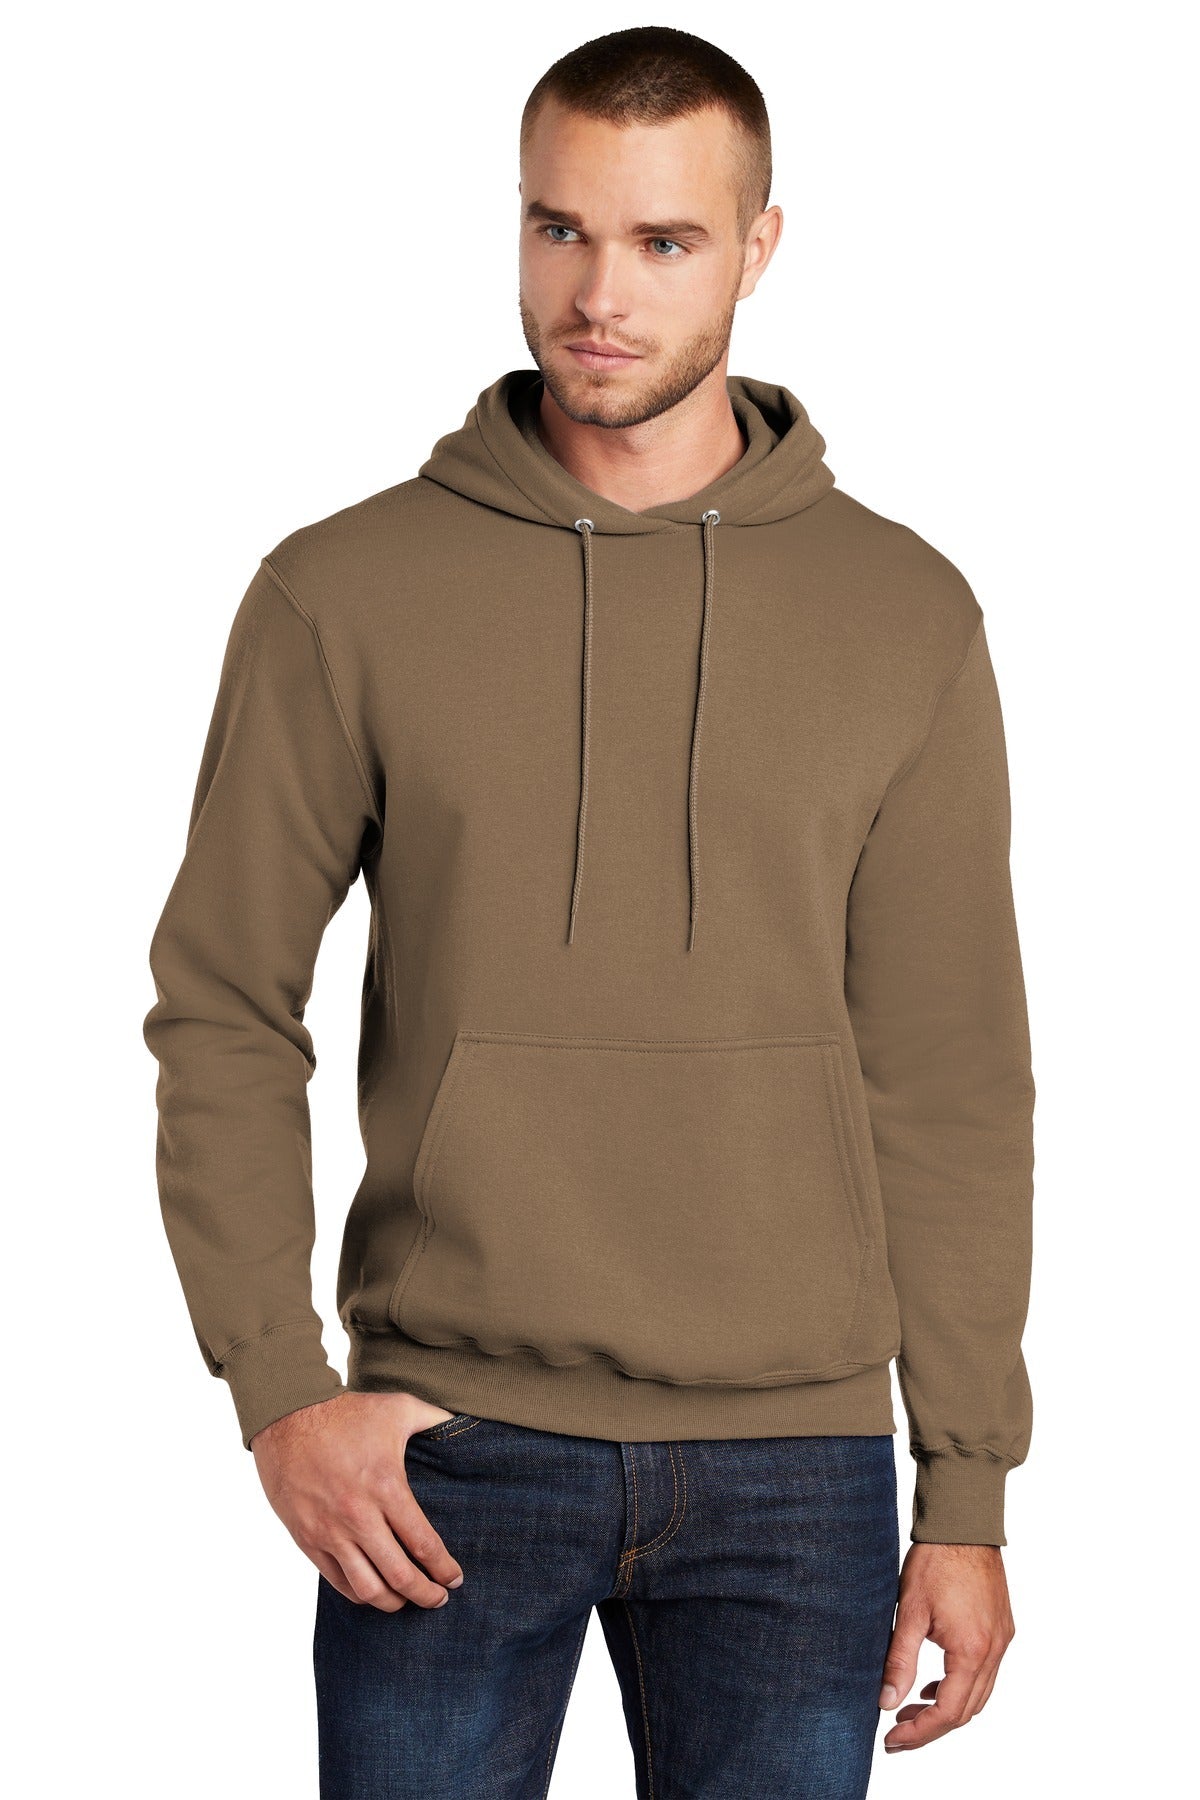 Port & Company® - Core Fleece Pullover Hooded Sweatshirt. PC78H [Woodland Brown] - DFW Impression